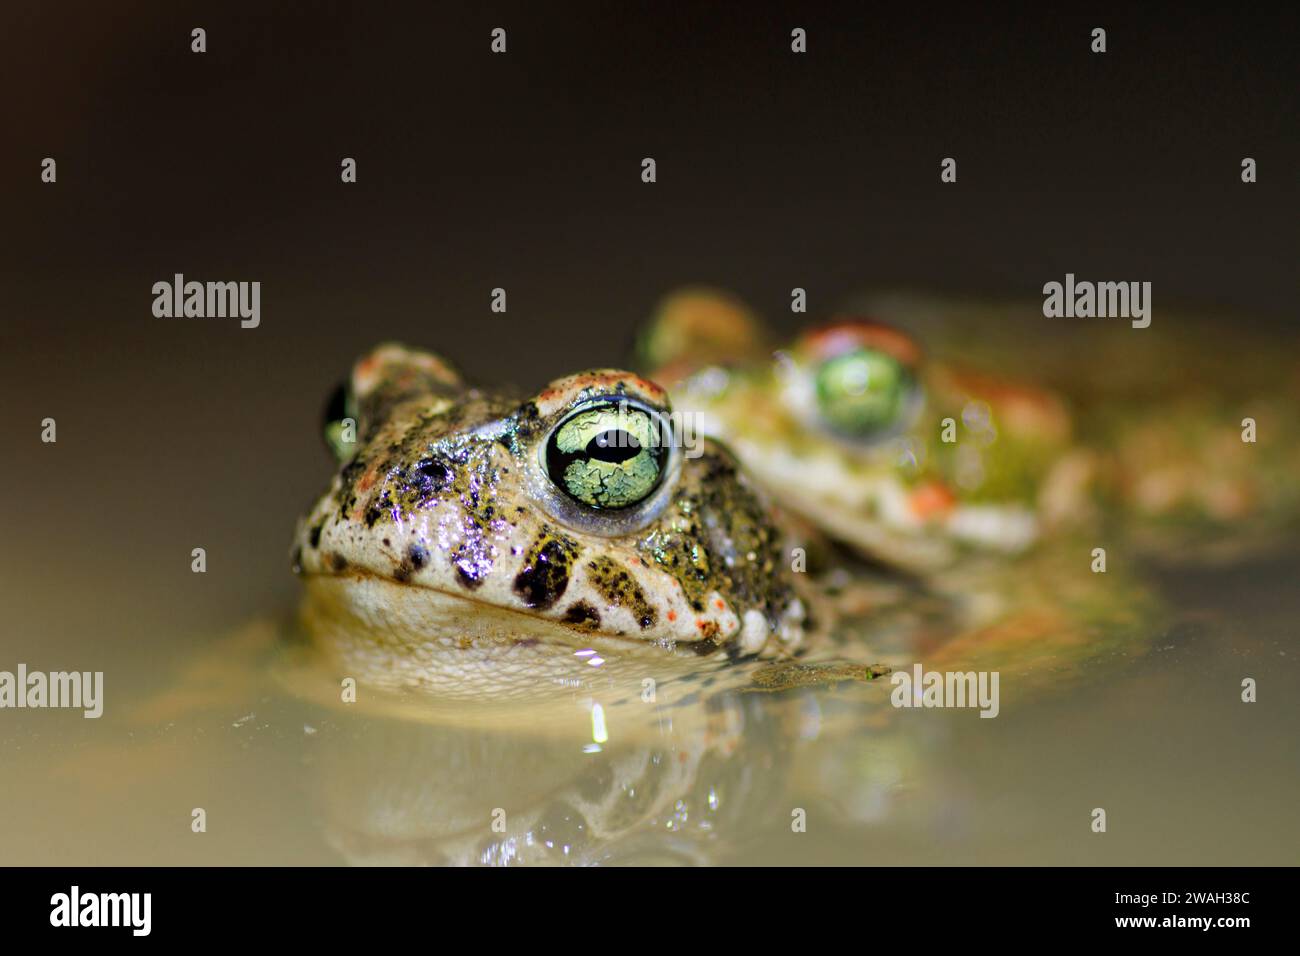 natterjack toad, natterjack, British toad (Bufo calamita, Epidalea calamita), natterjack pair in amplexus, France, Ramatuelle Stock Photo